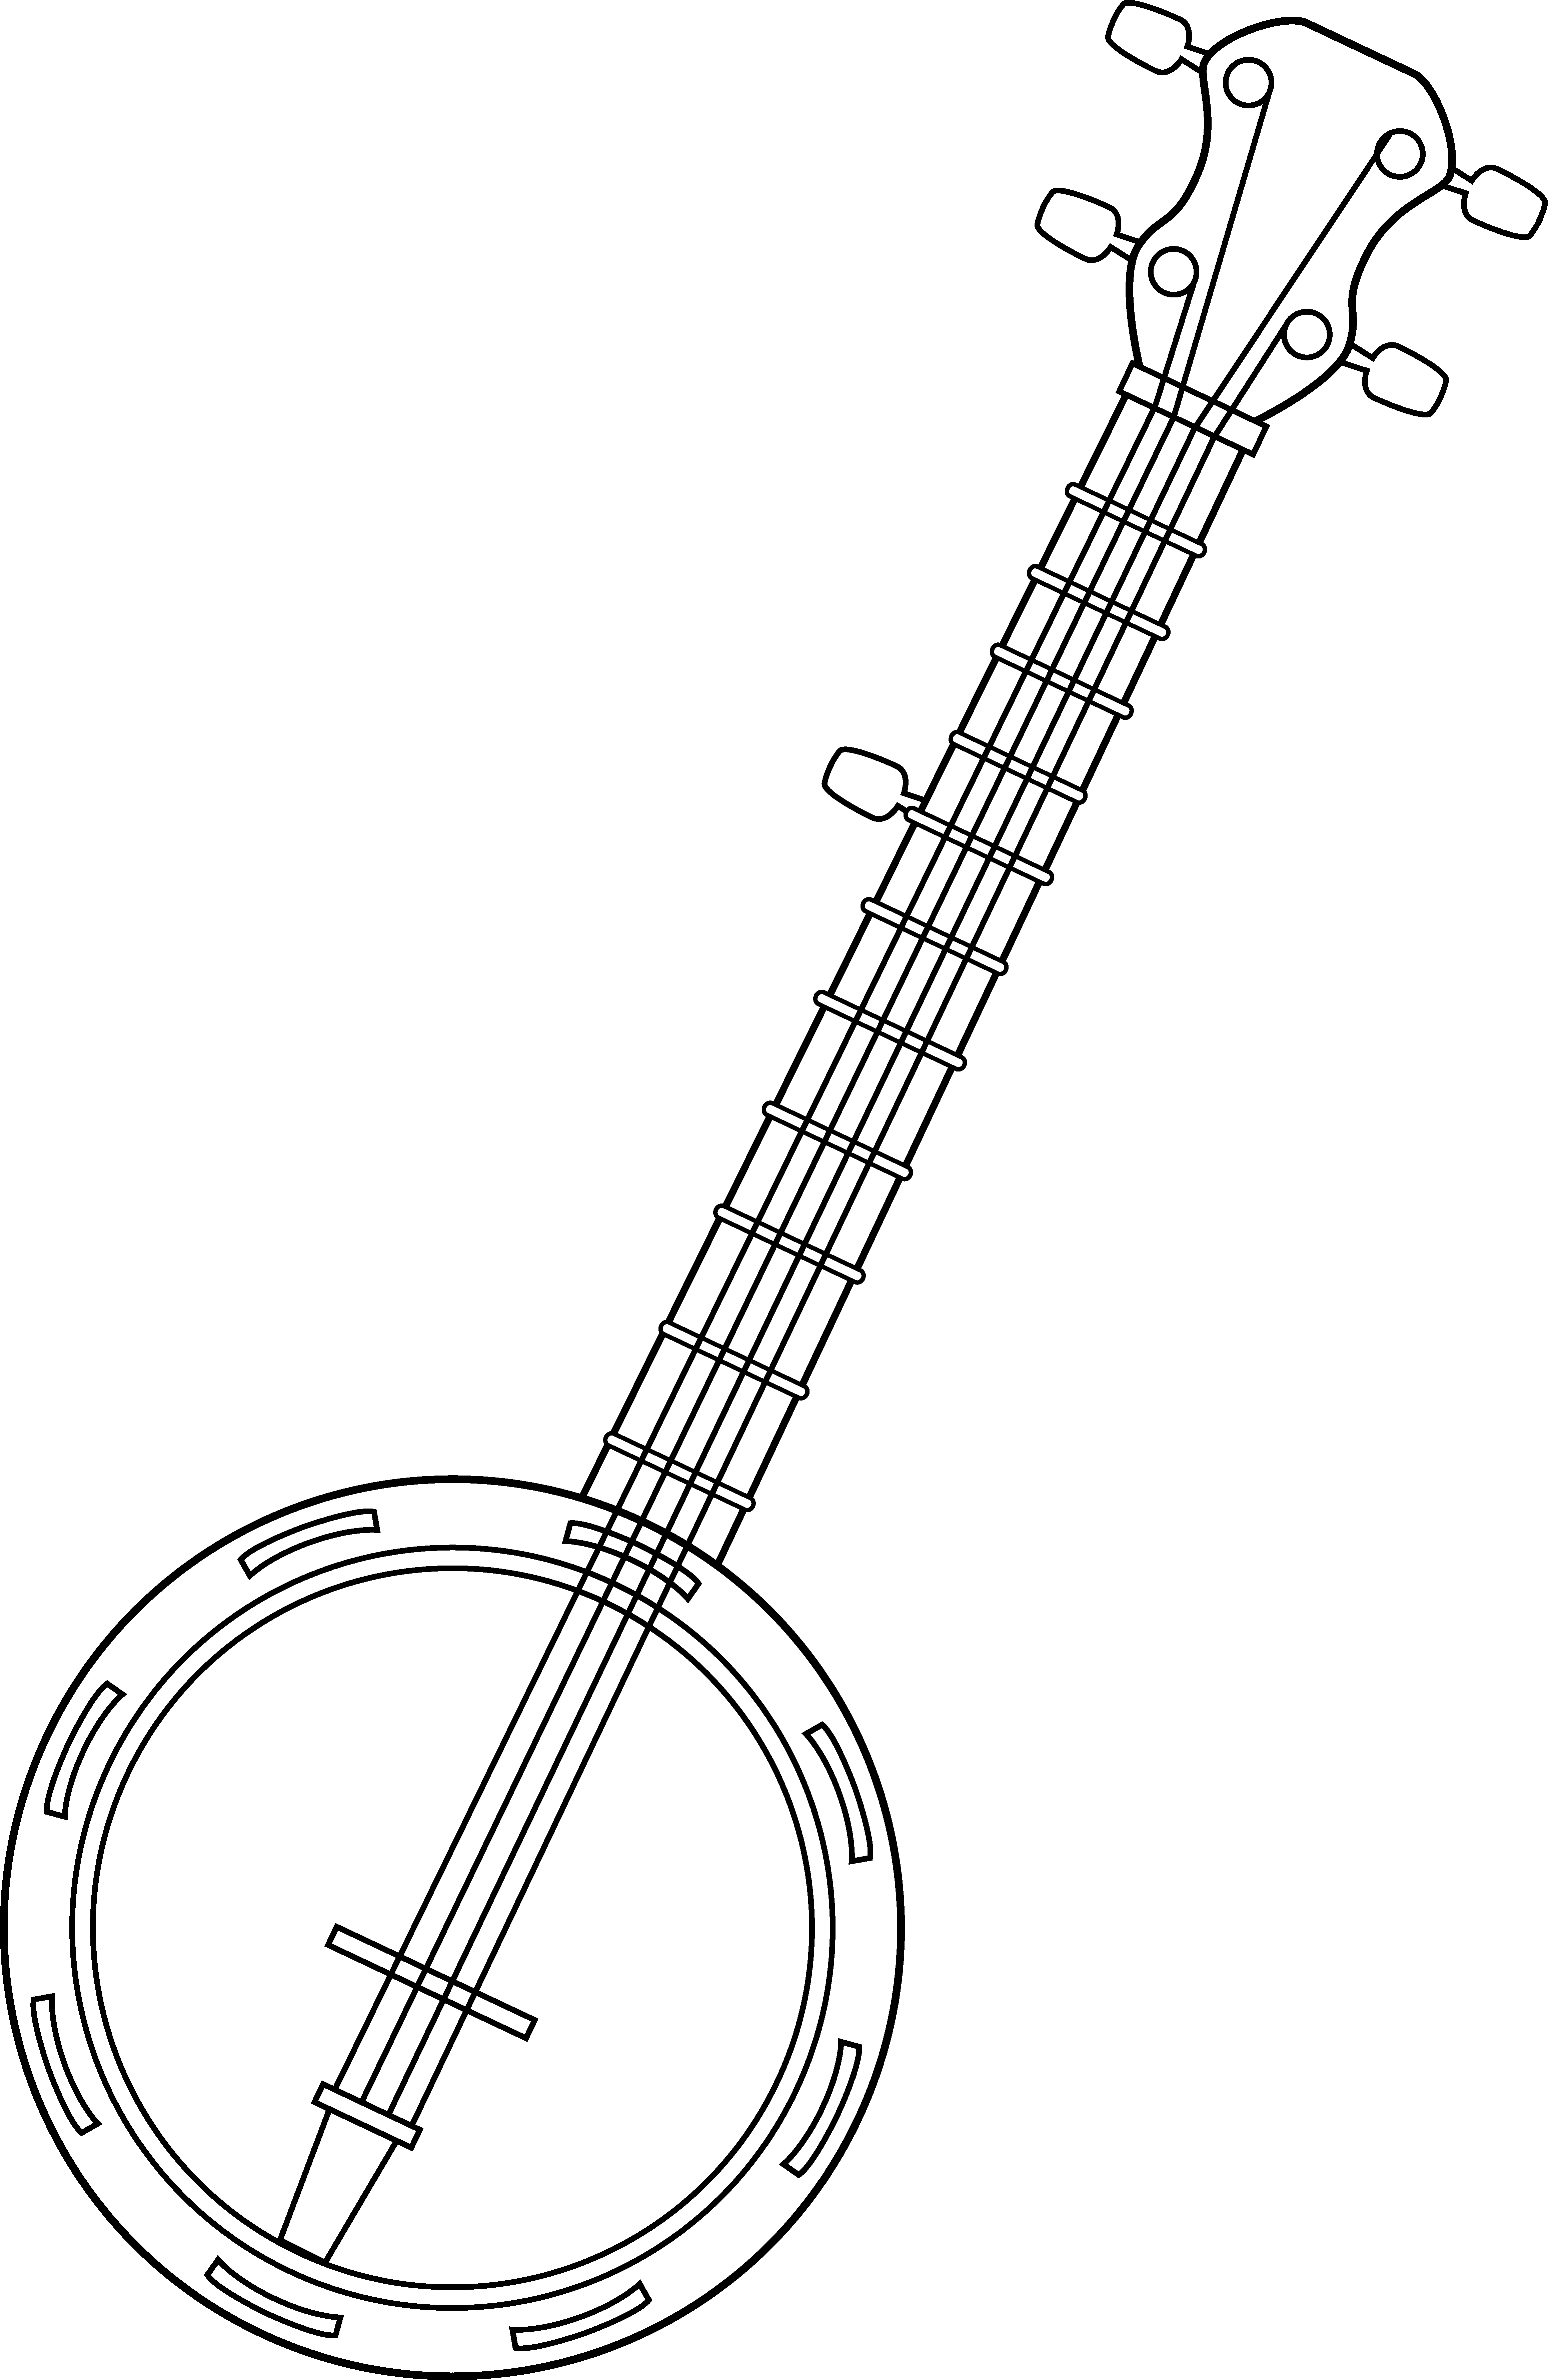 A White Banjo On A Black Background